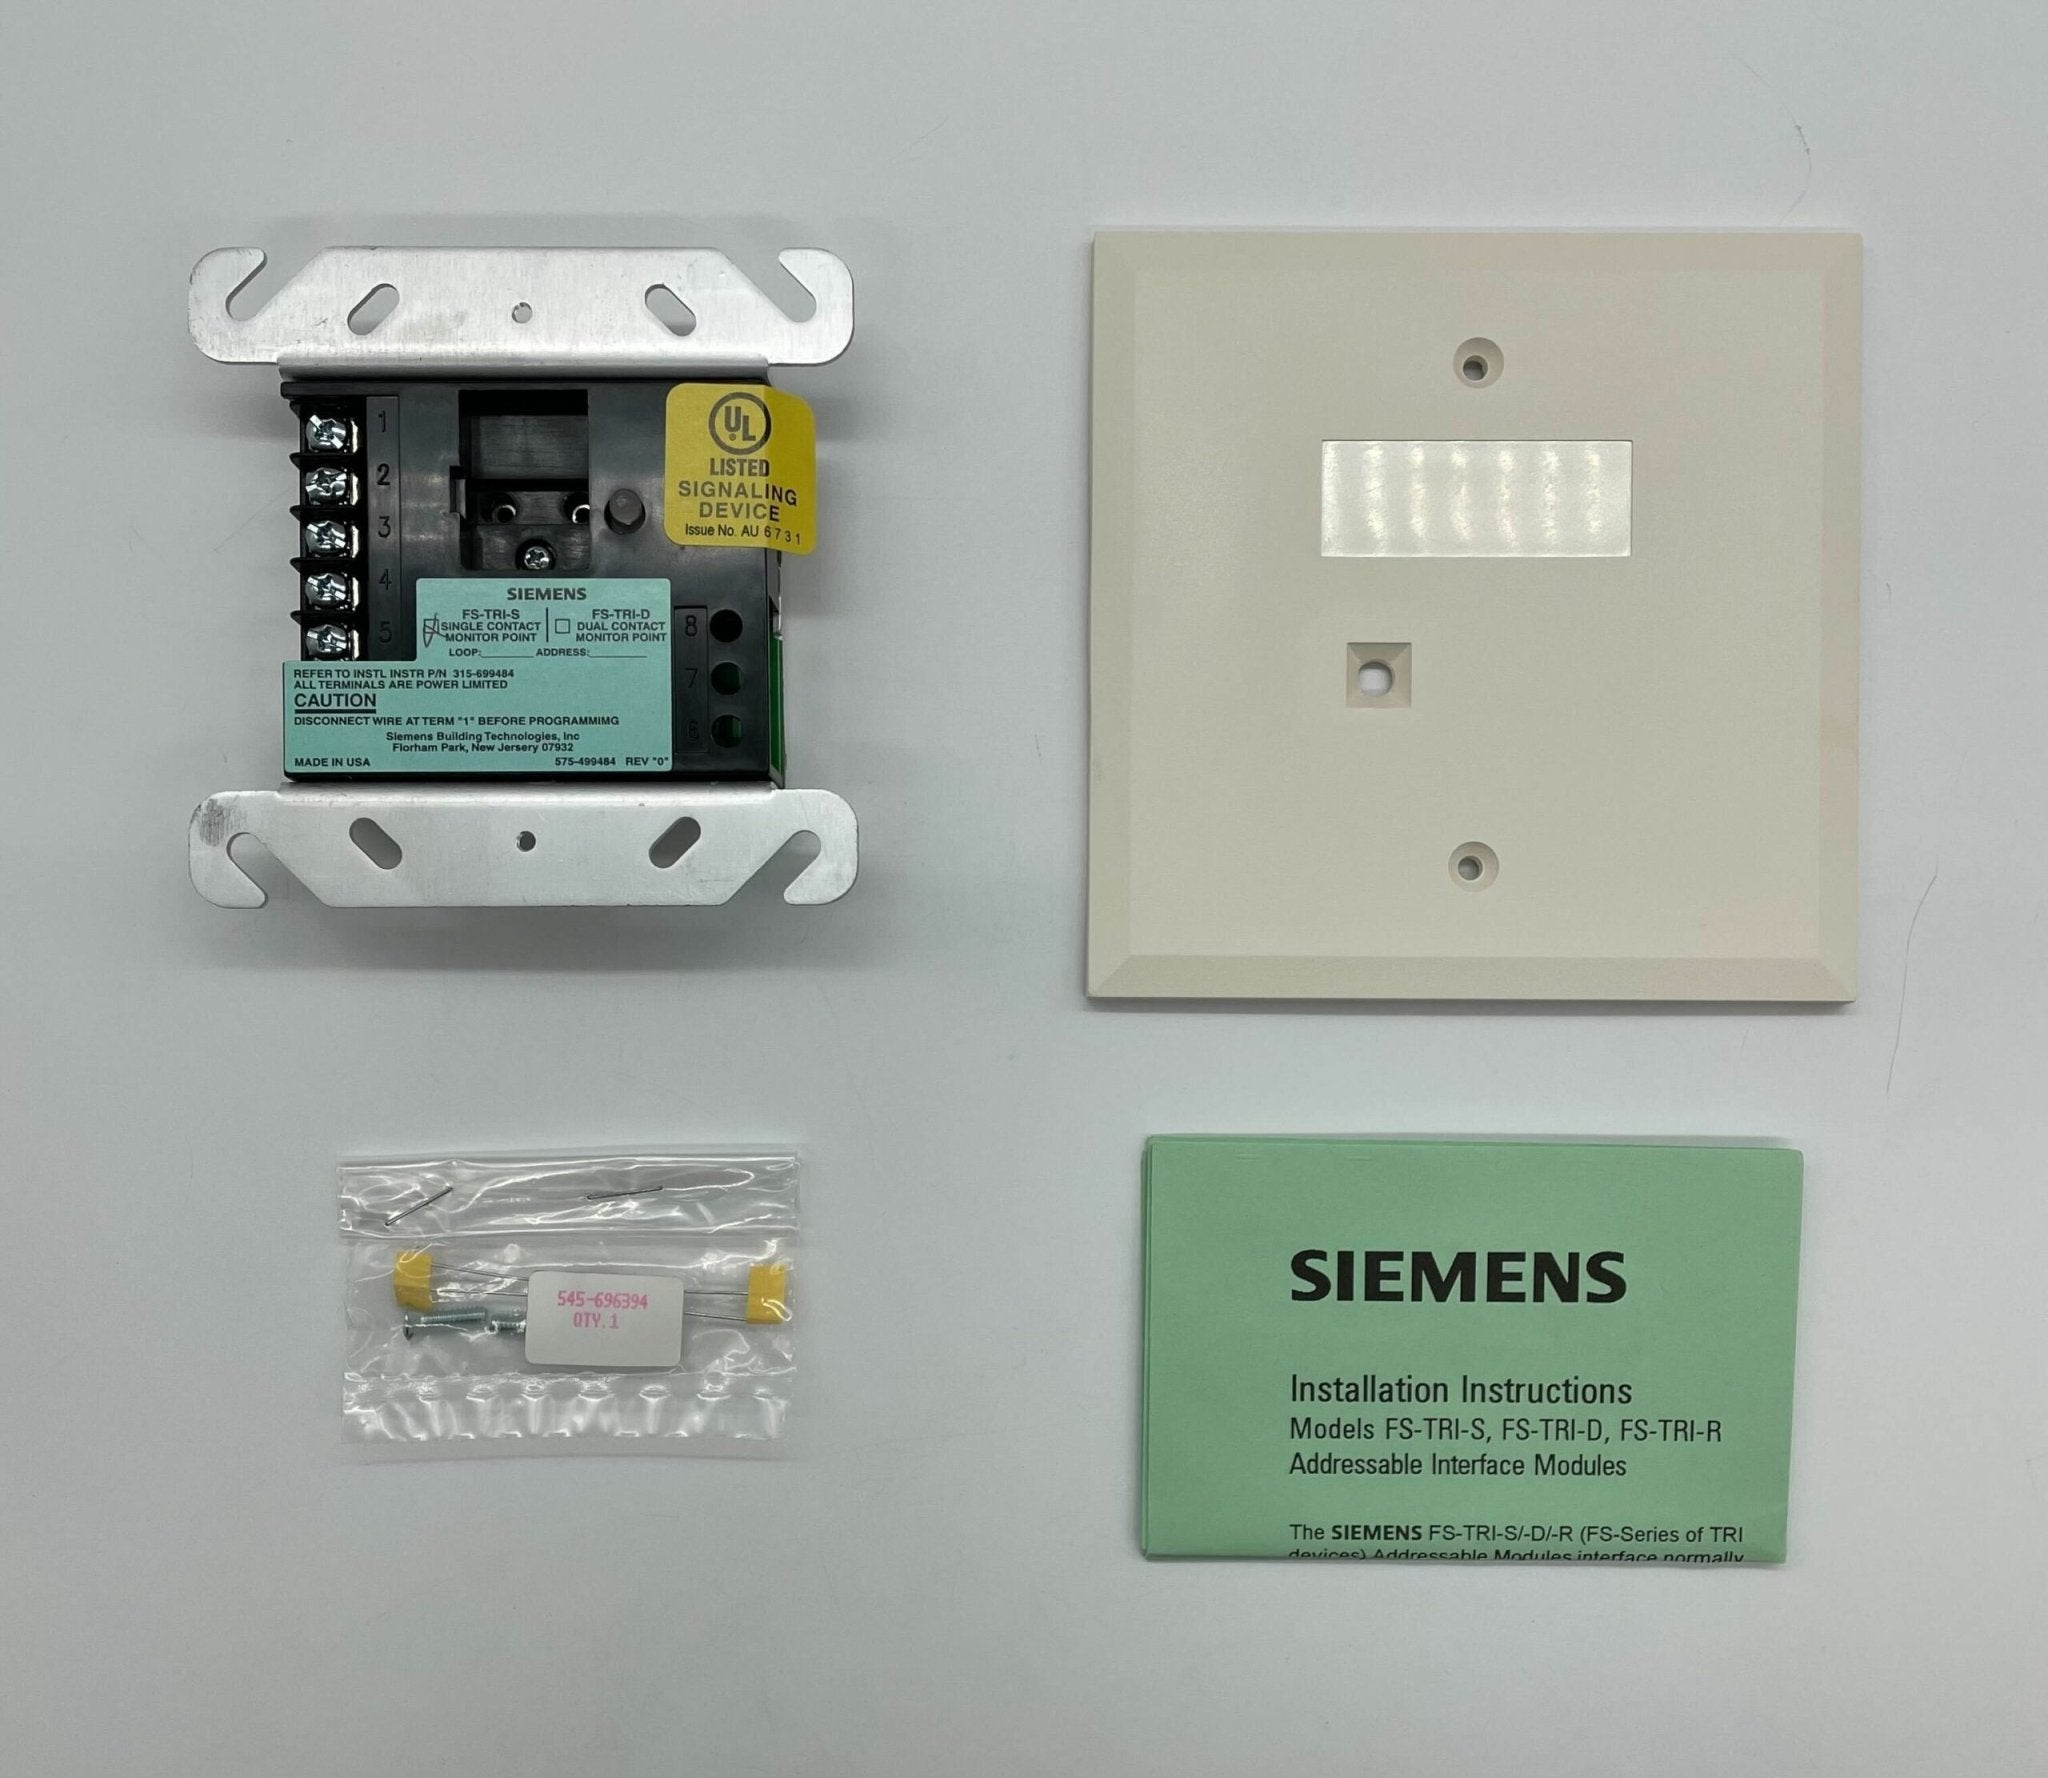 Siemens FS-TRI-S - The Fire Alarm Supplier